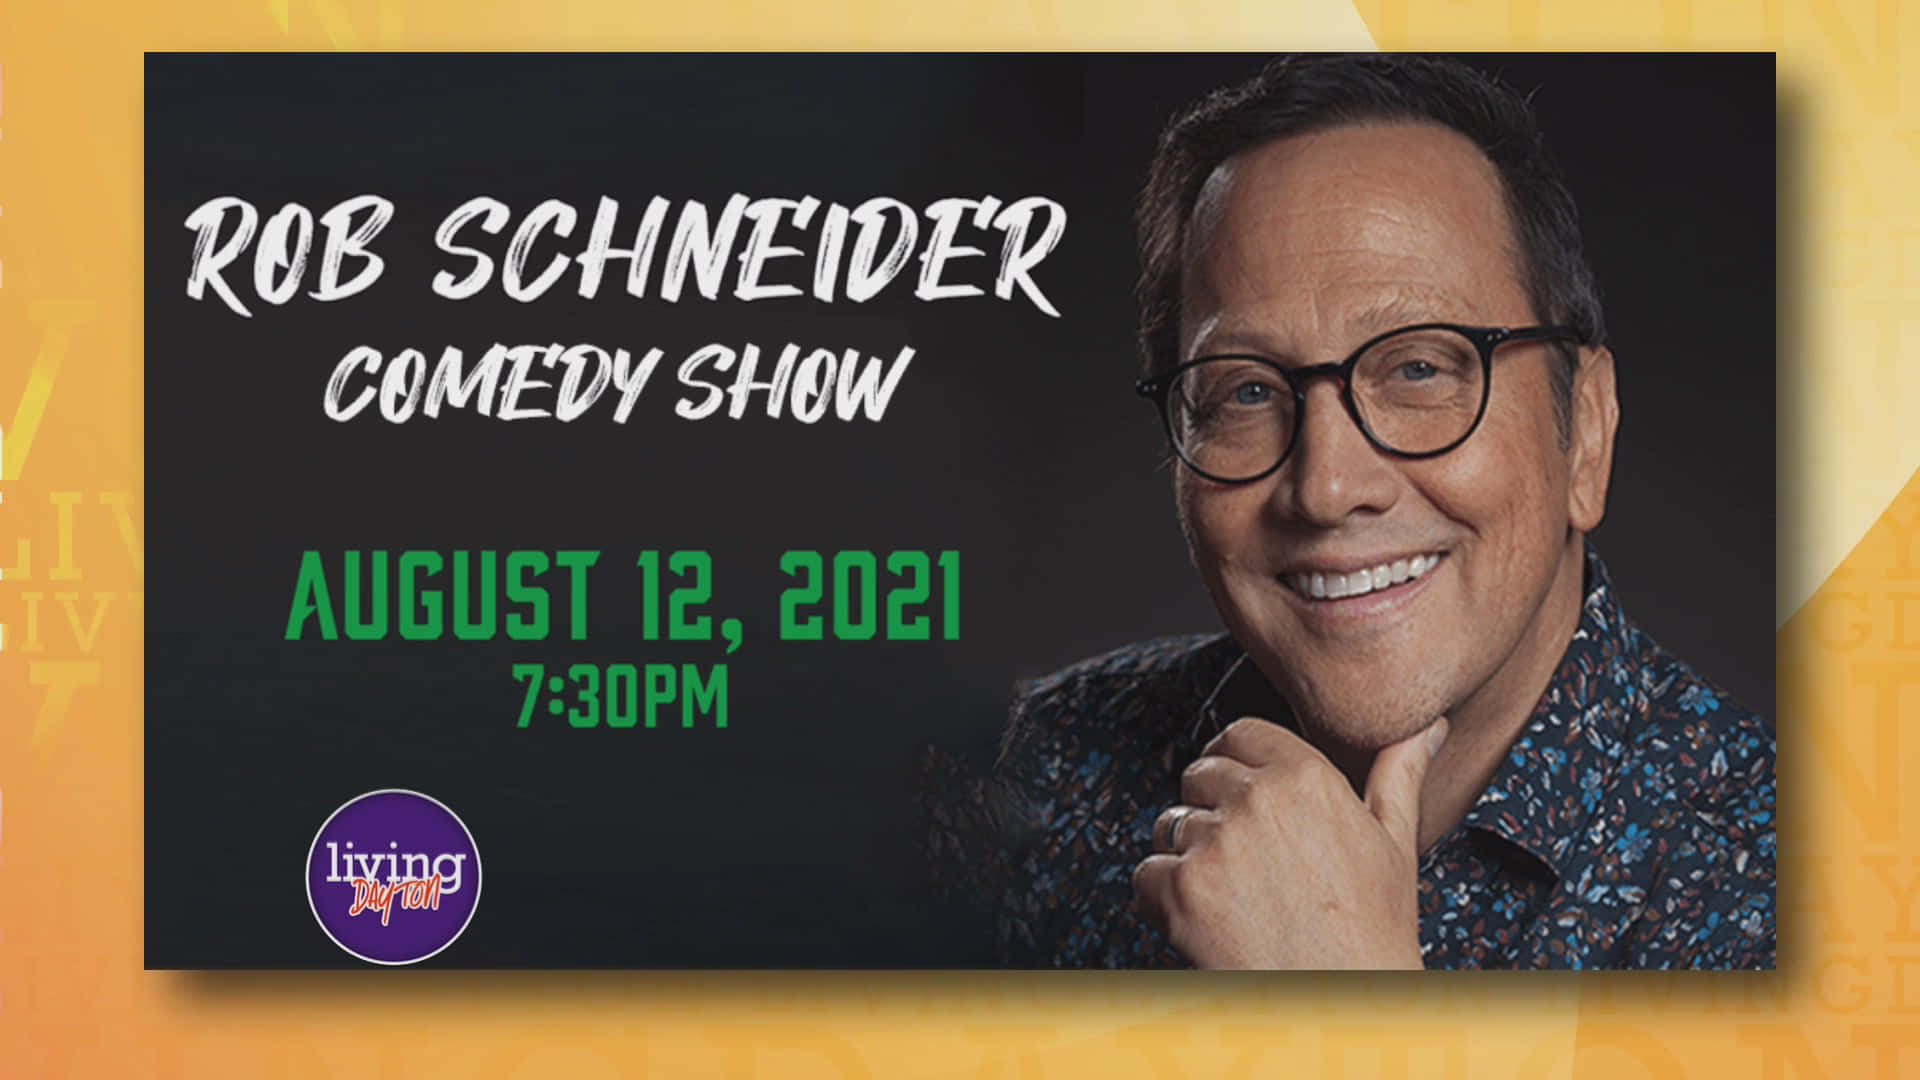 Rob Schneider With Comedy Show Schedule Wallpaper